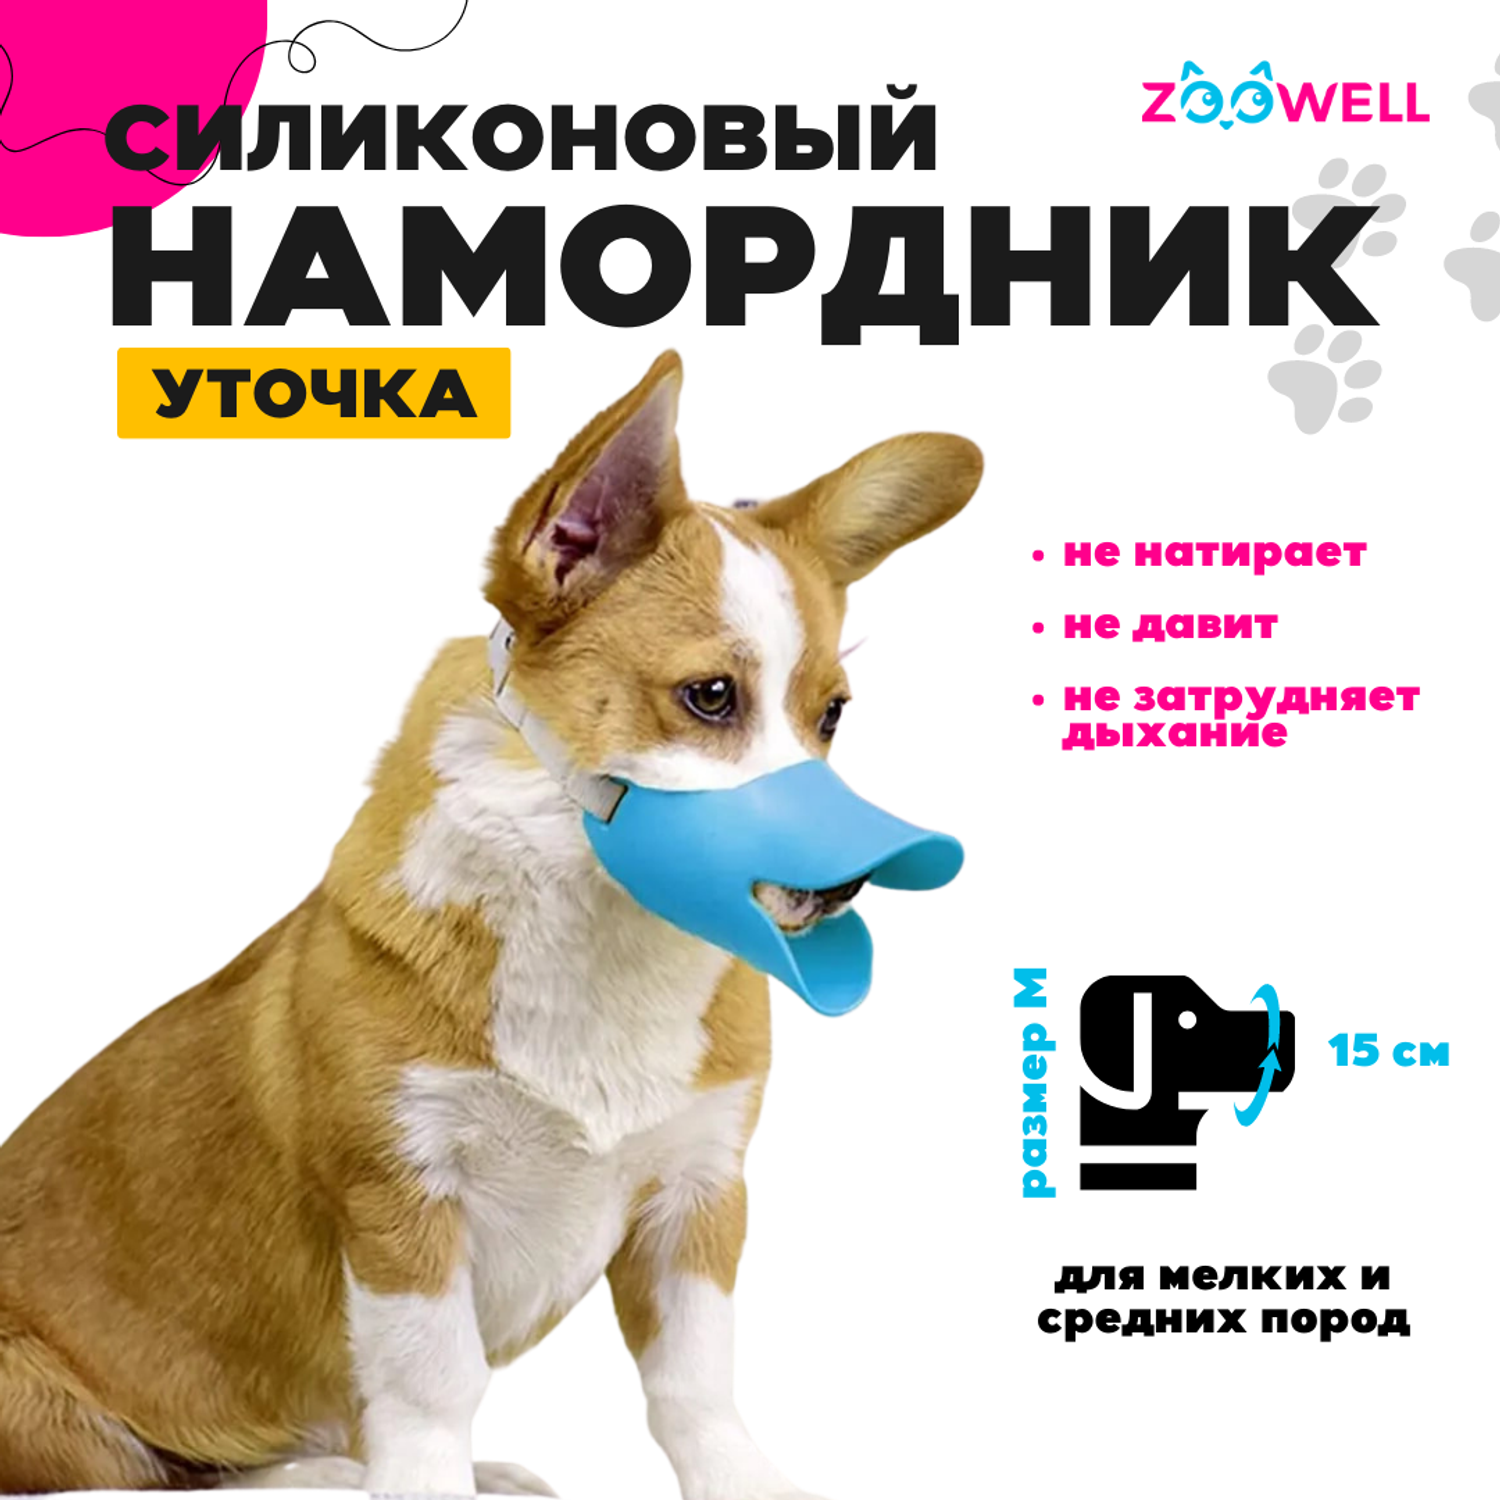 Намордник ZDK Силиконовый для собак ZooWell голубой M - фото 2